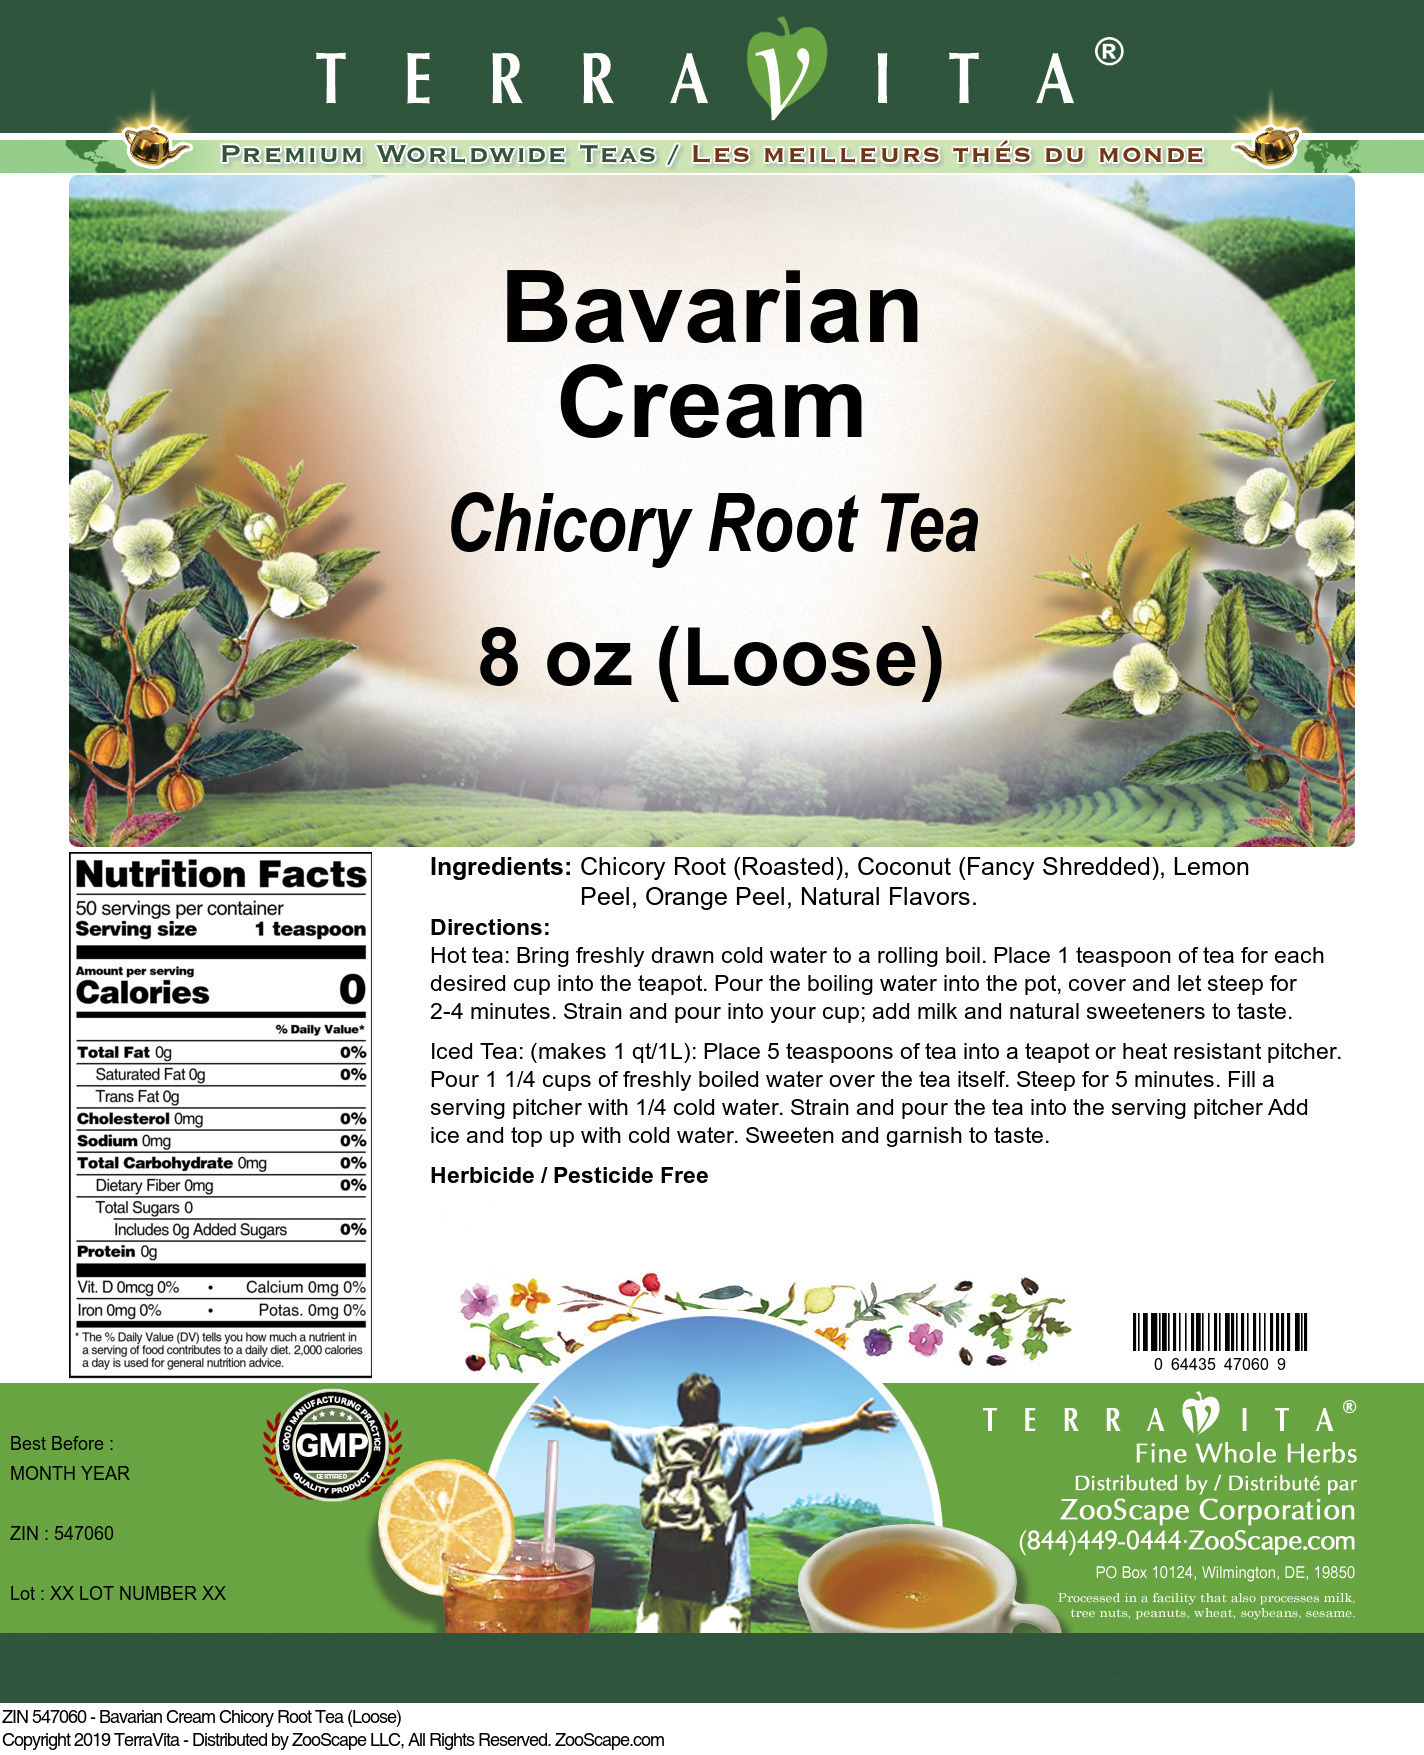 Bavarian Cream Chicory Root Tea (Loose) - Label